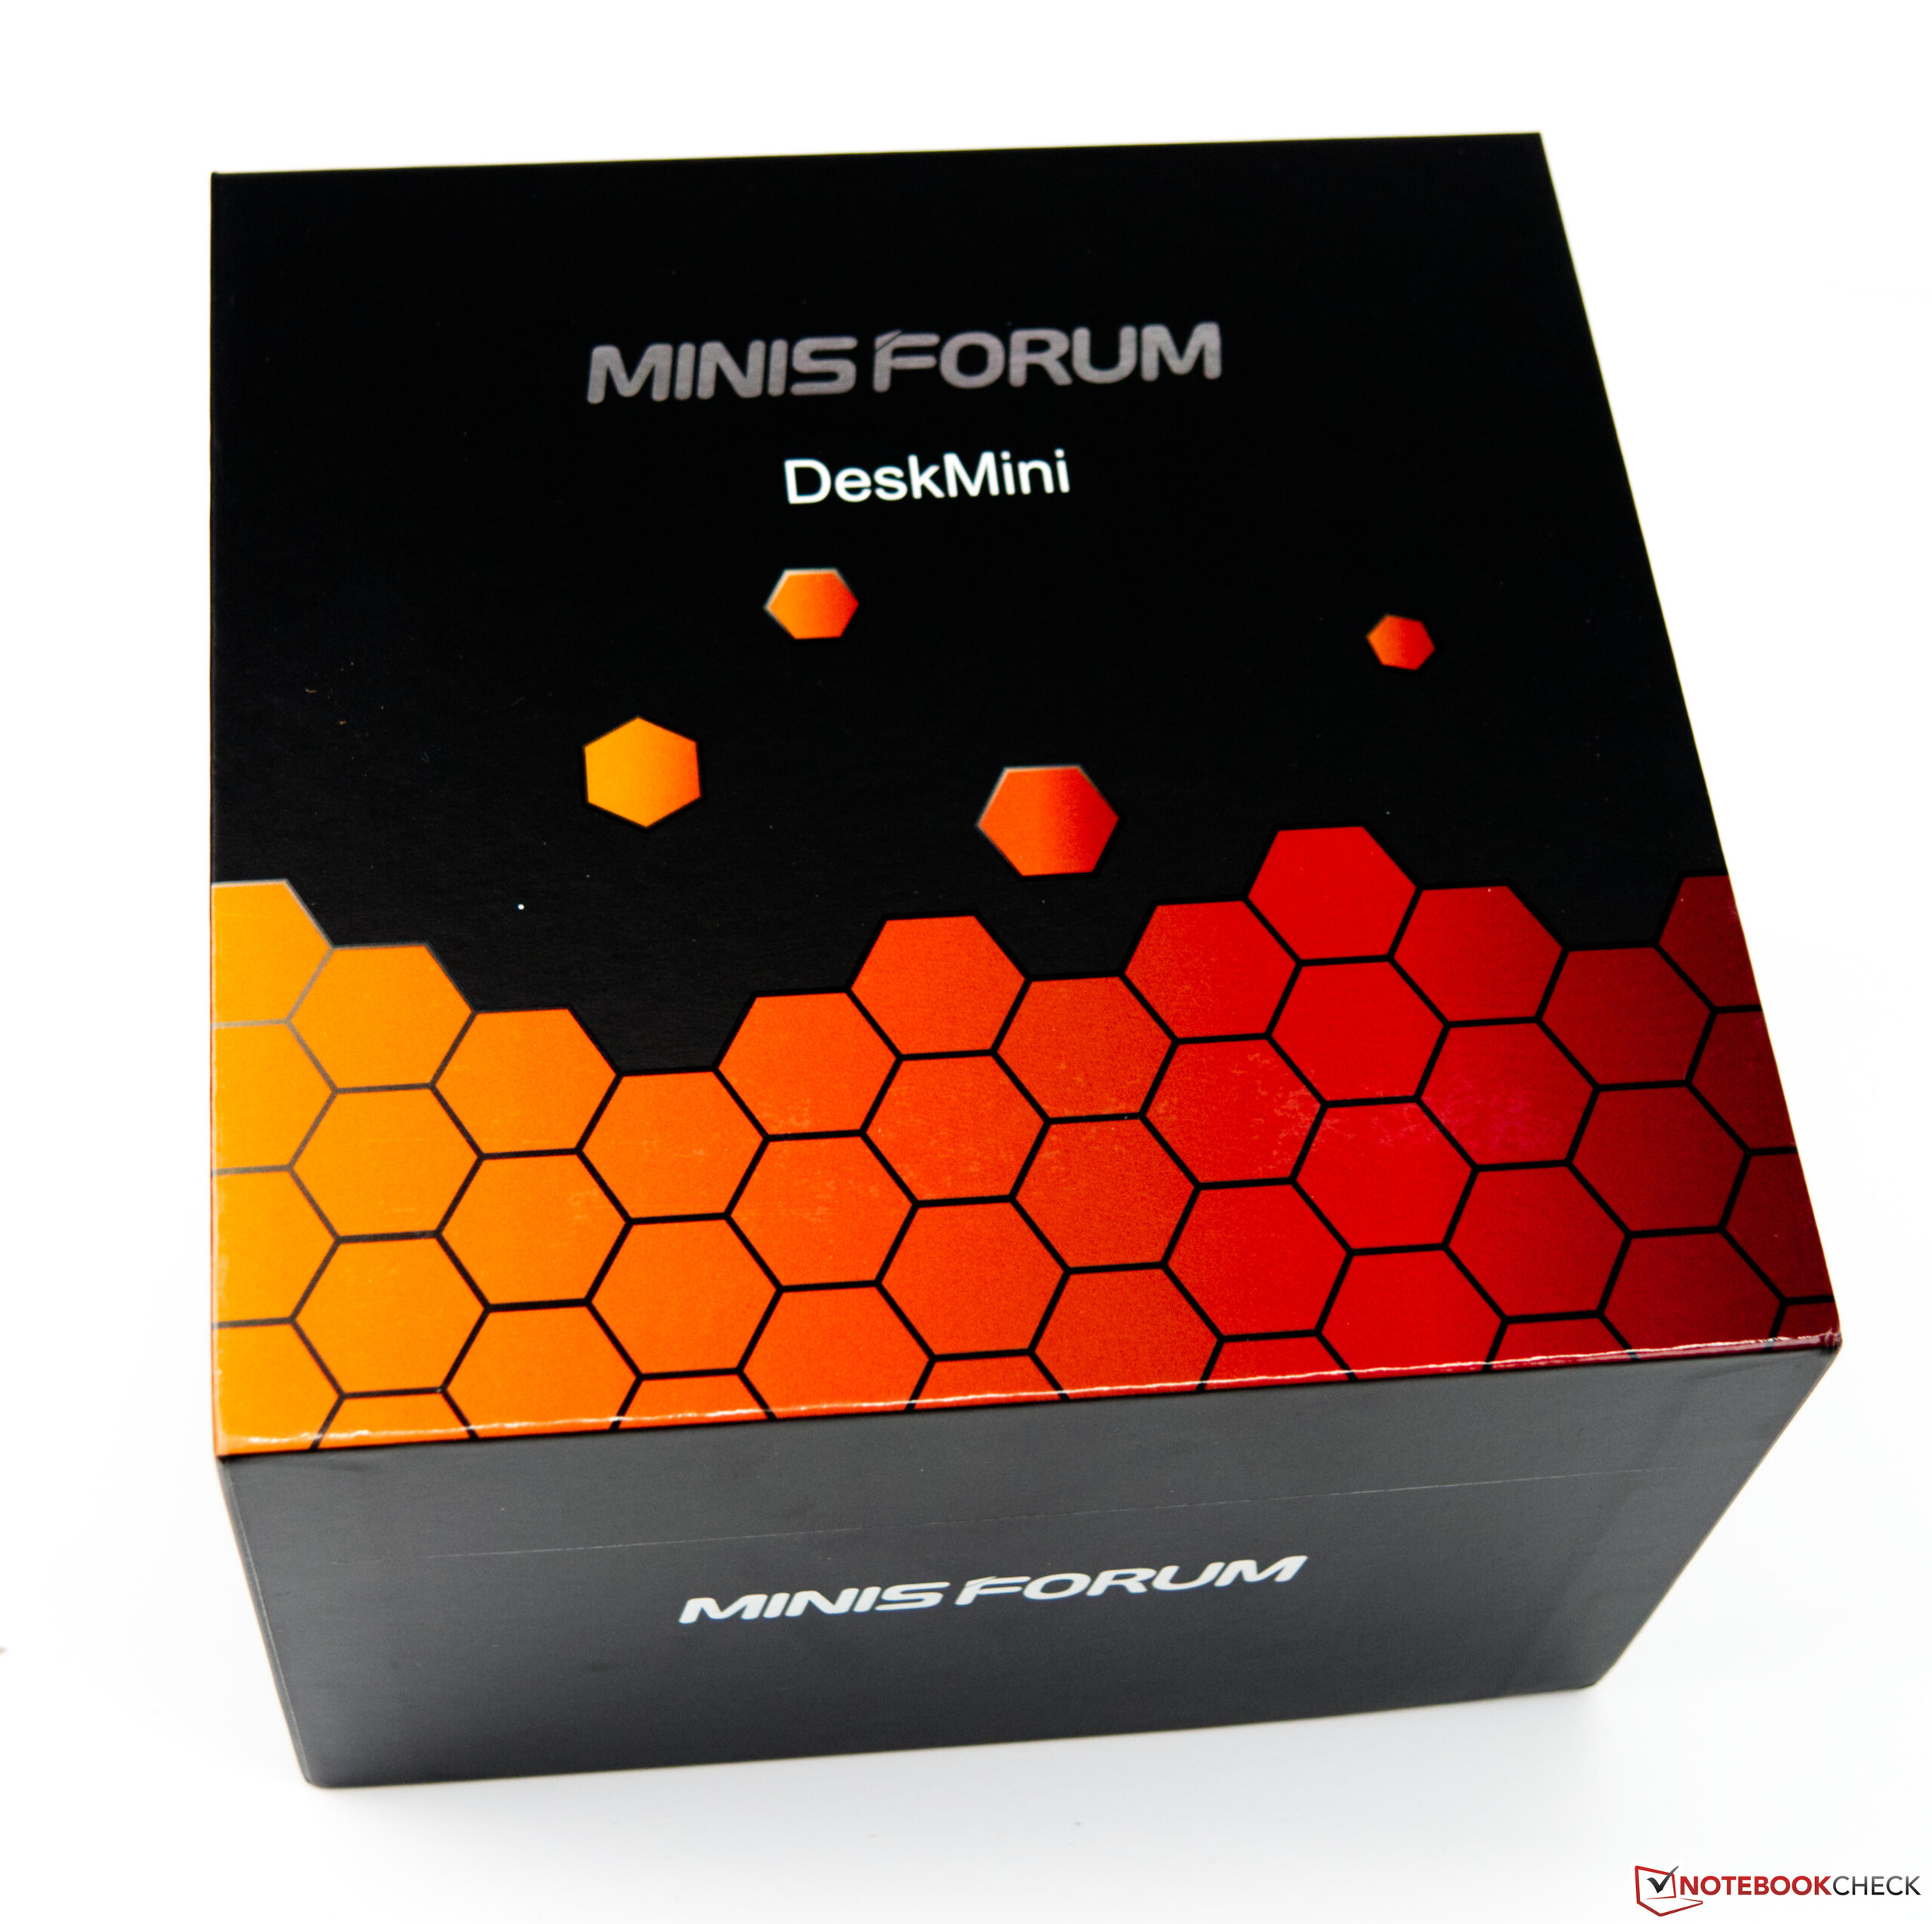 Review of the Minisforum EliteMini HM90 desktop PC with fast AMD